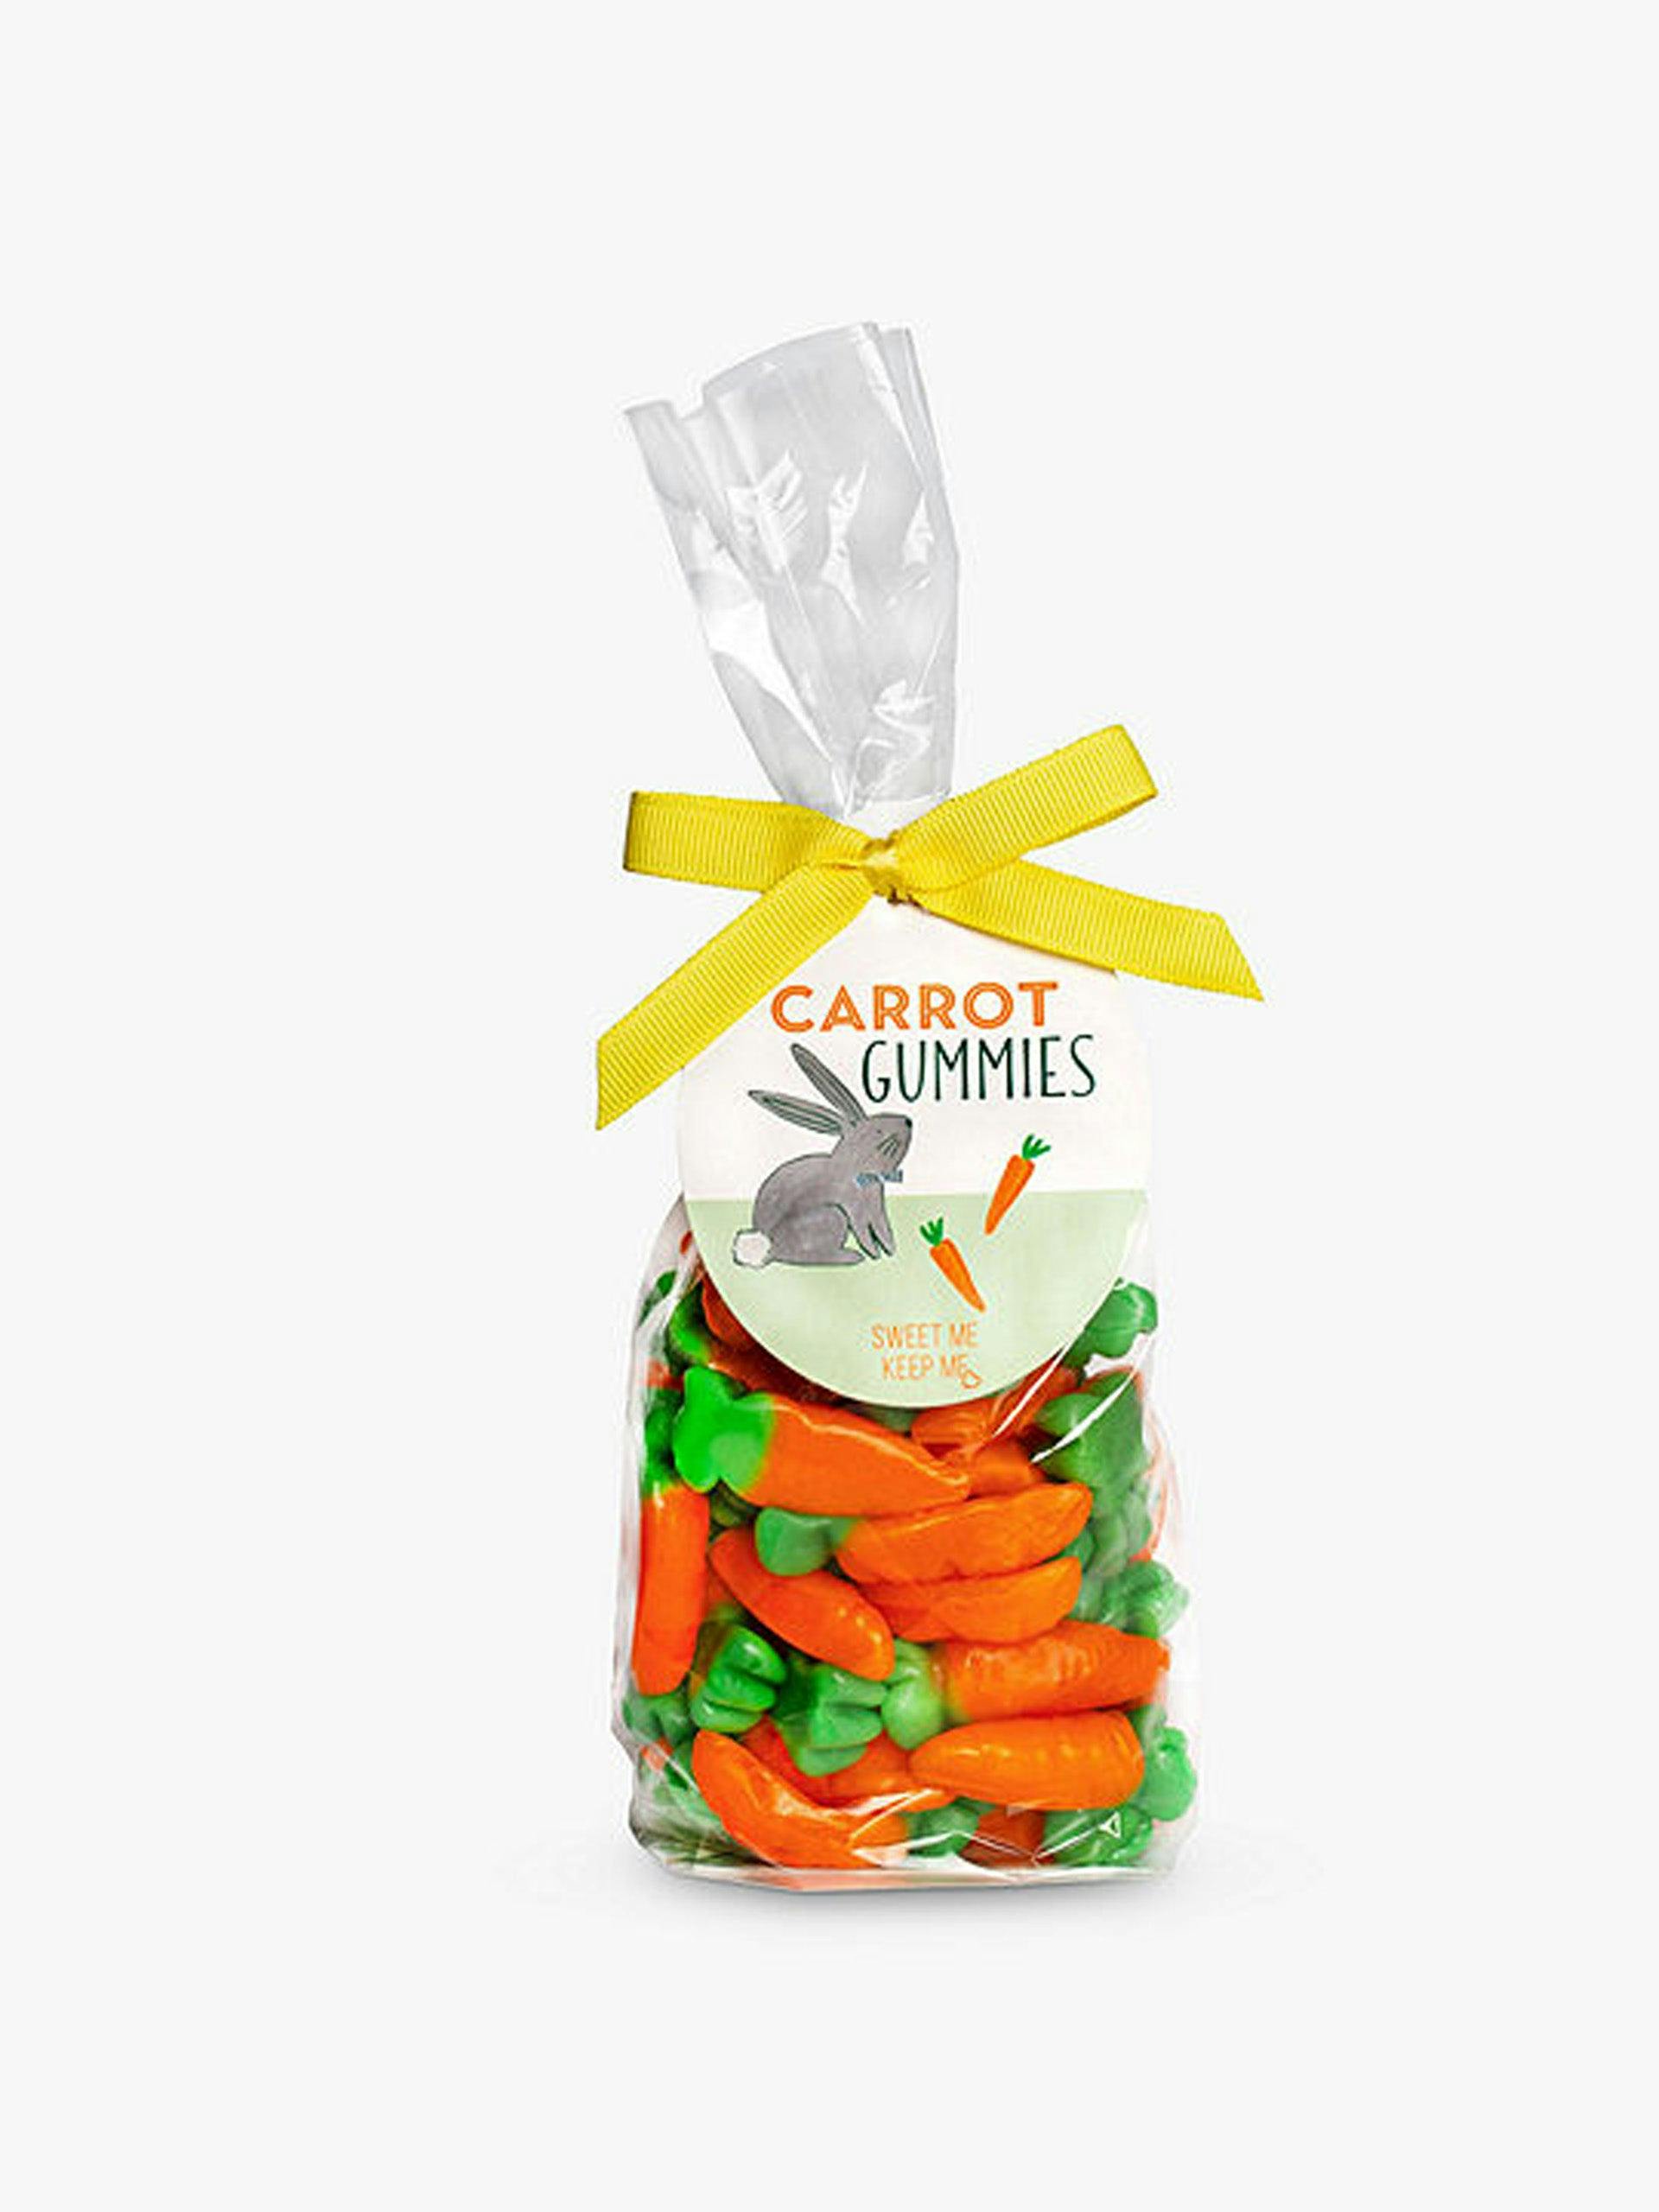 Gummy carrots